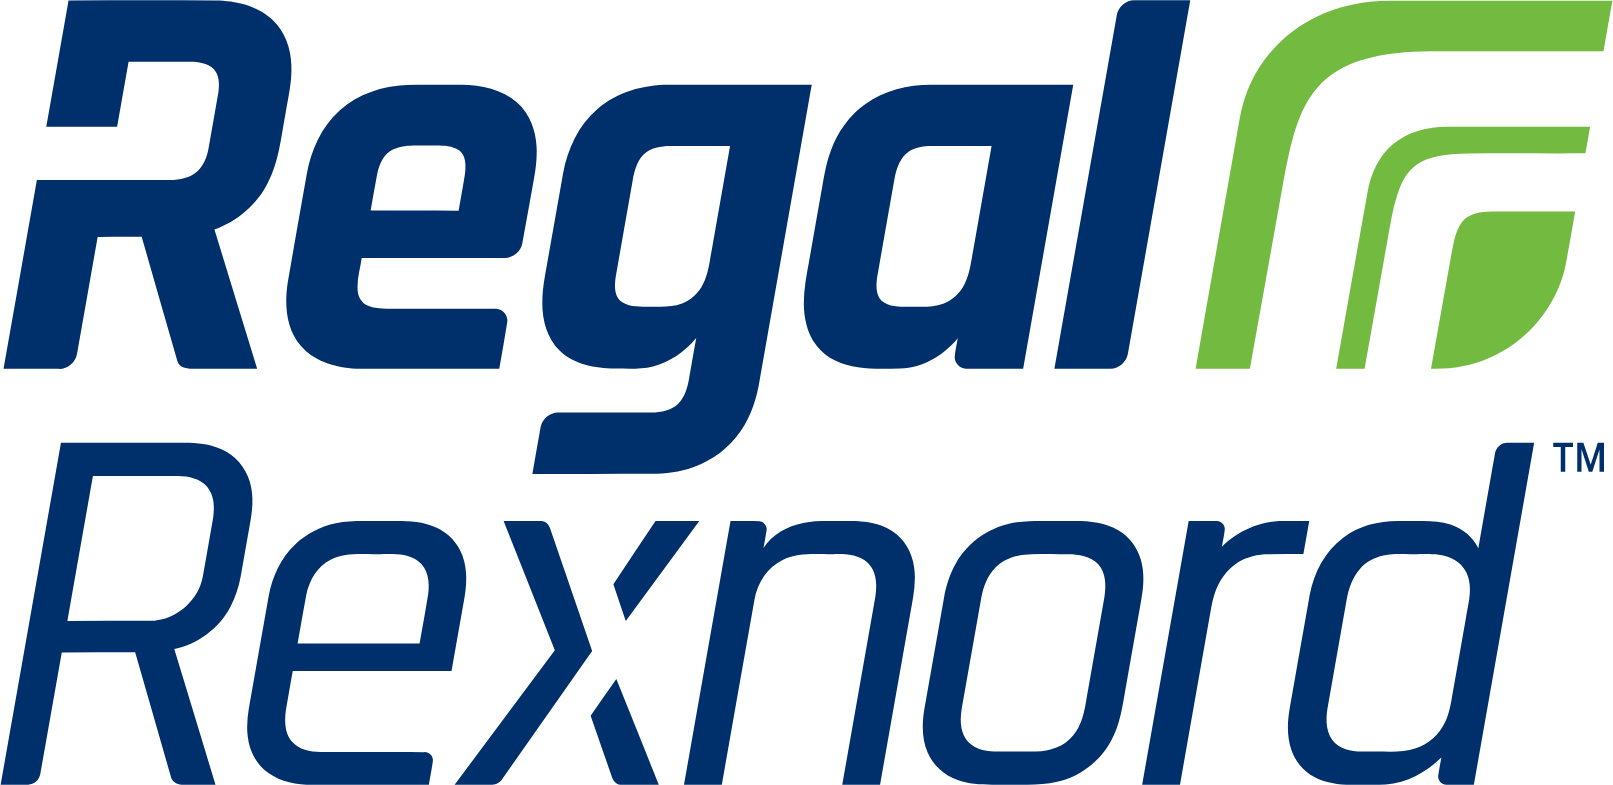 Regal Rexnord logo large (transparent PNG)